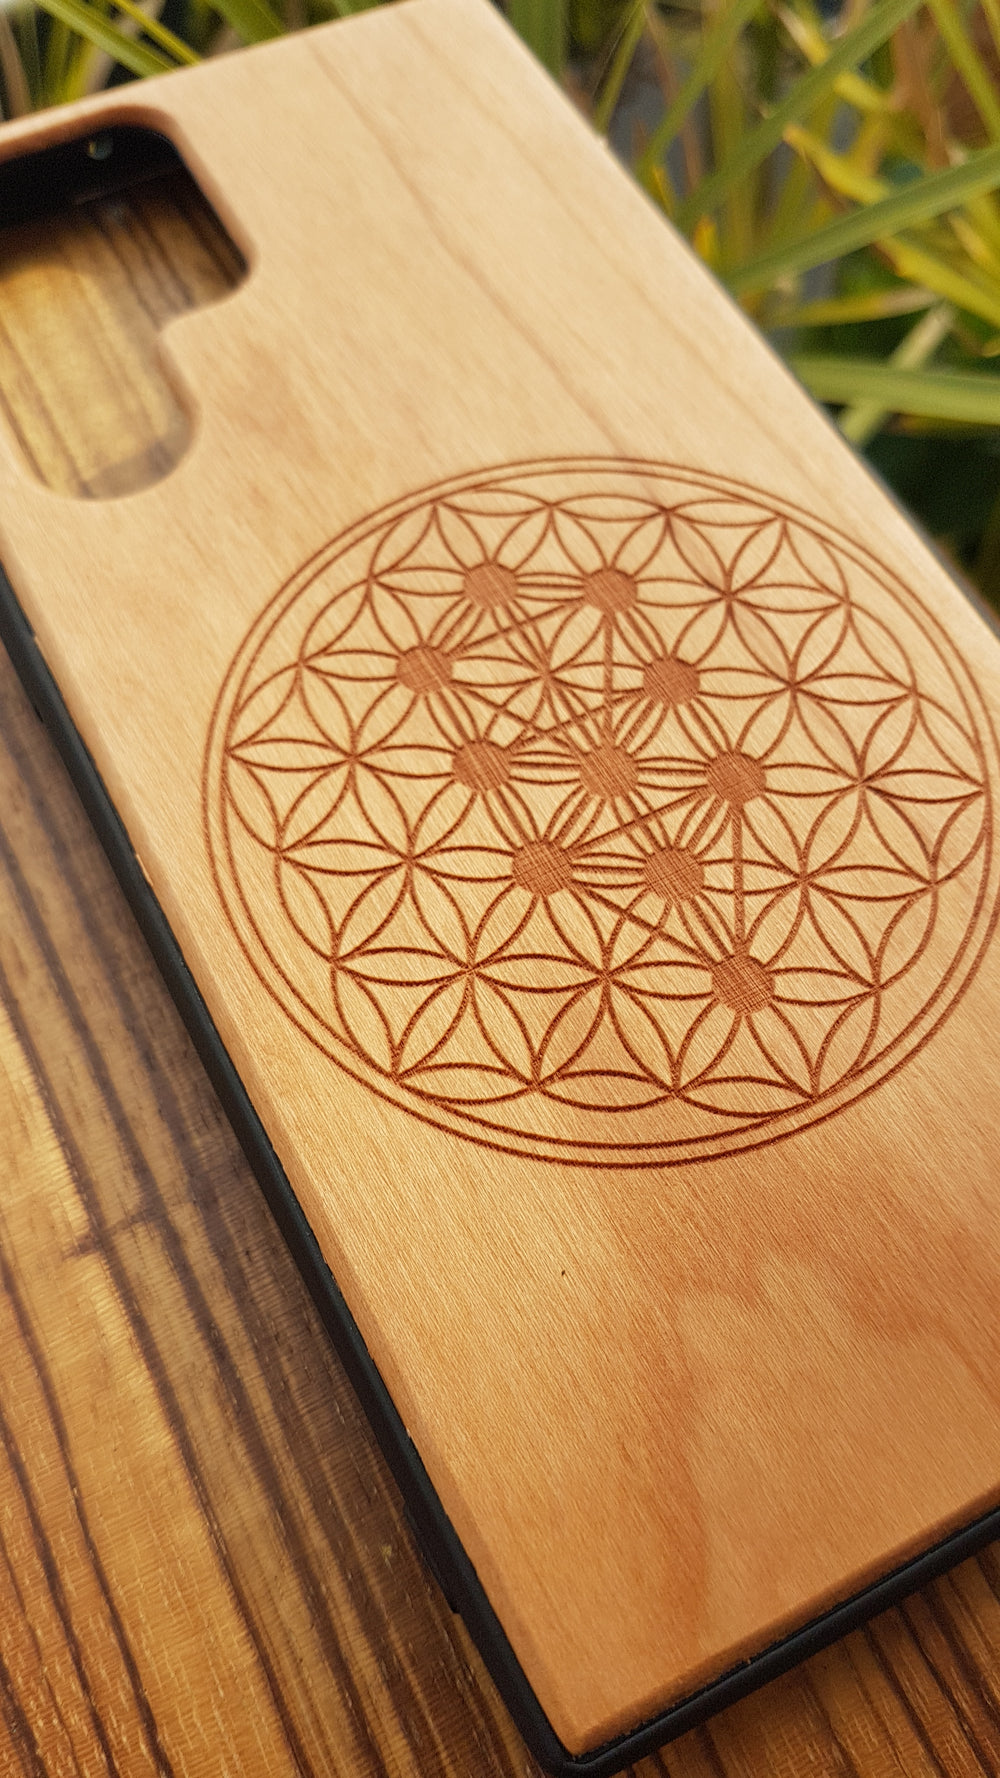 TREE OF LIFE Sacred Geometry Wood Phone Case